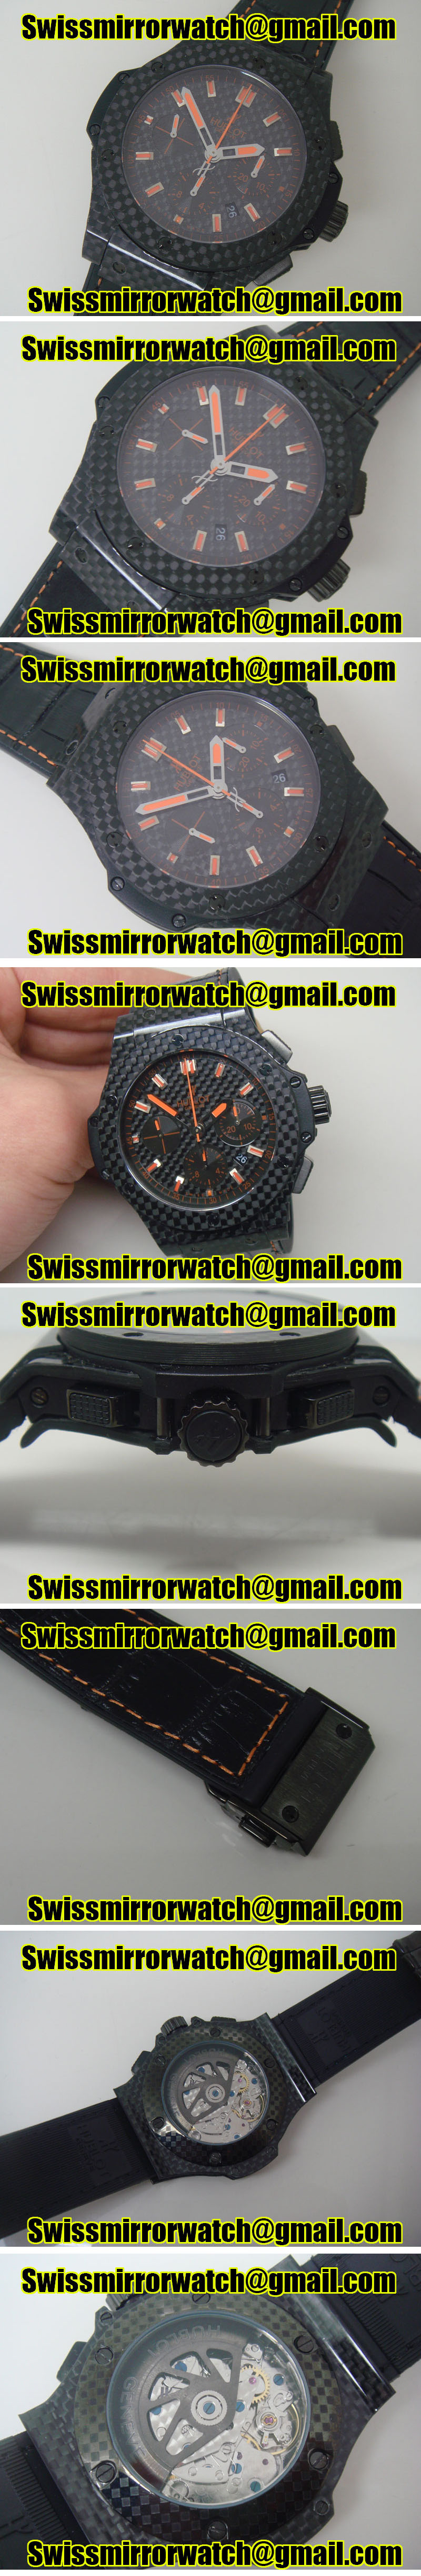 Hublot 301.QX.1740.GR All Carbon Orange Replica Watches